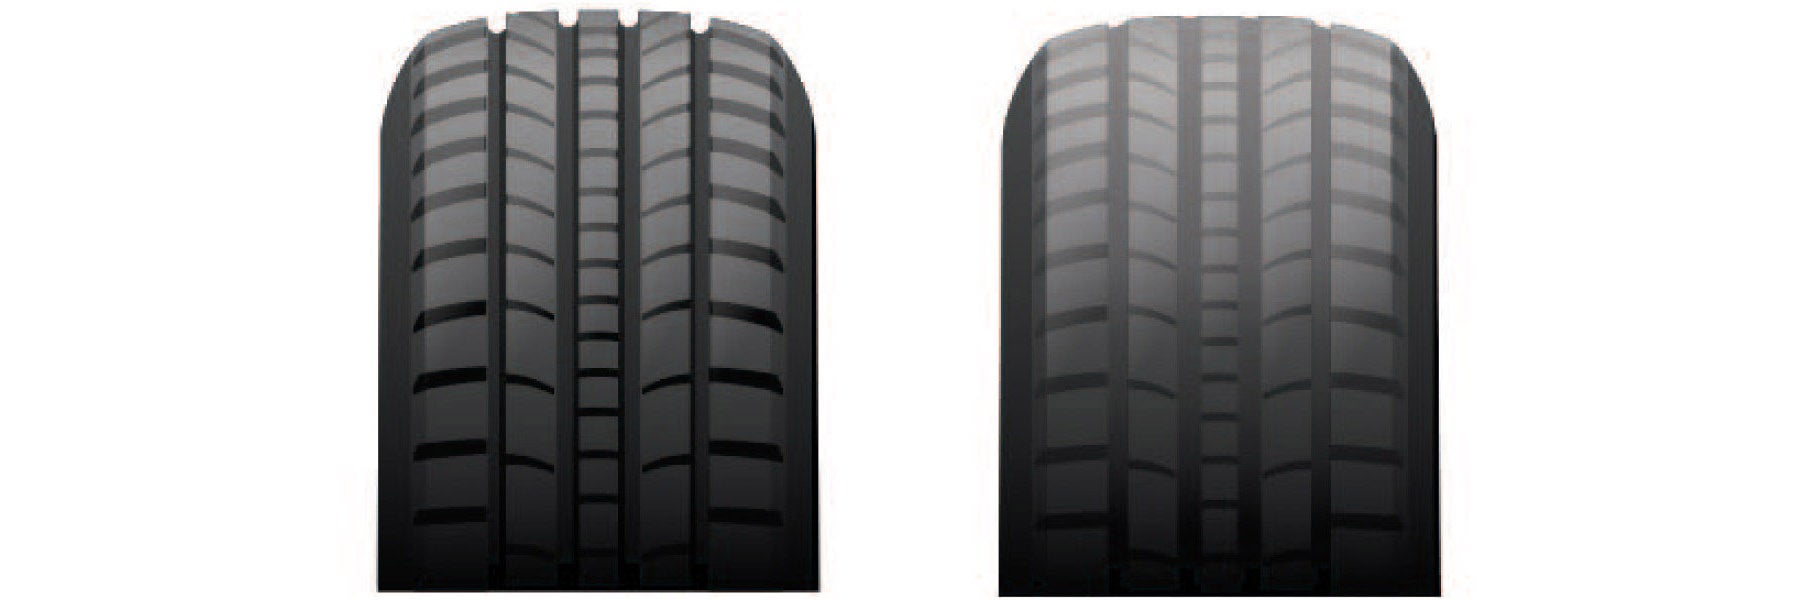 Tire tread depth comparison at Kimberly Eakin Kia in Lufkin TX